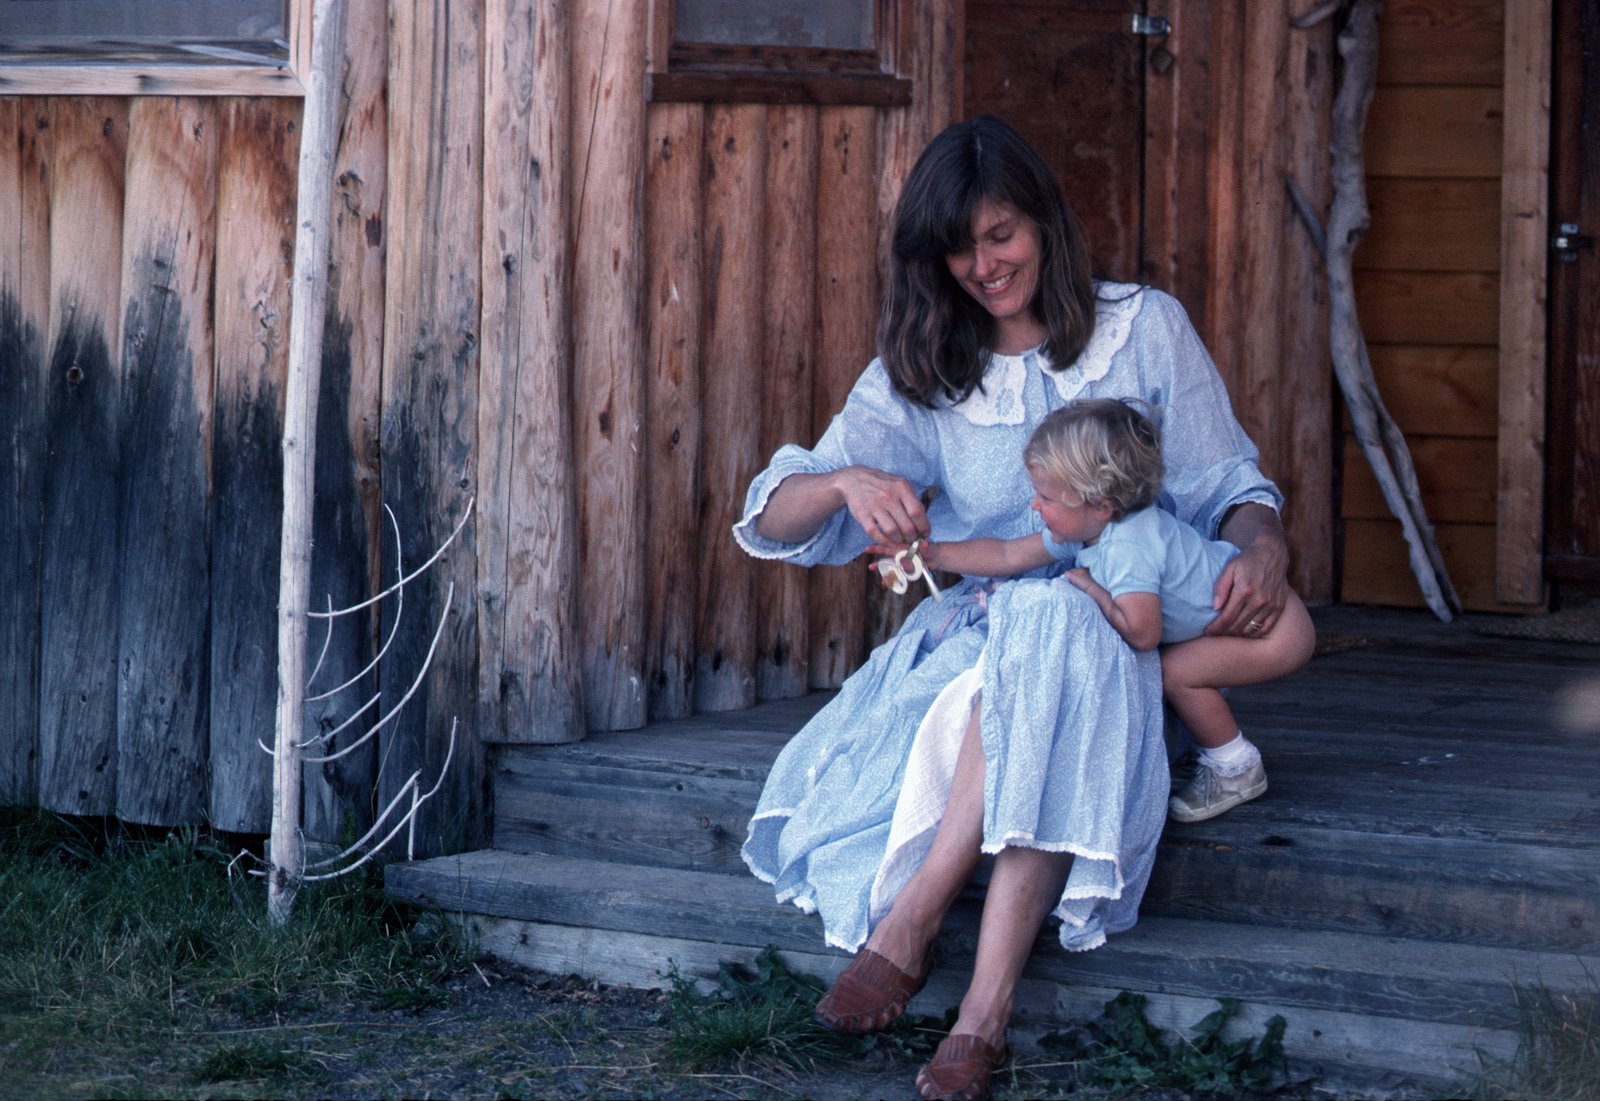 Gail and Tara, summer of 1989, Wolf Creek Lodge, Ealue Lake.